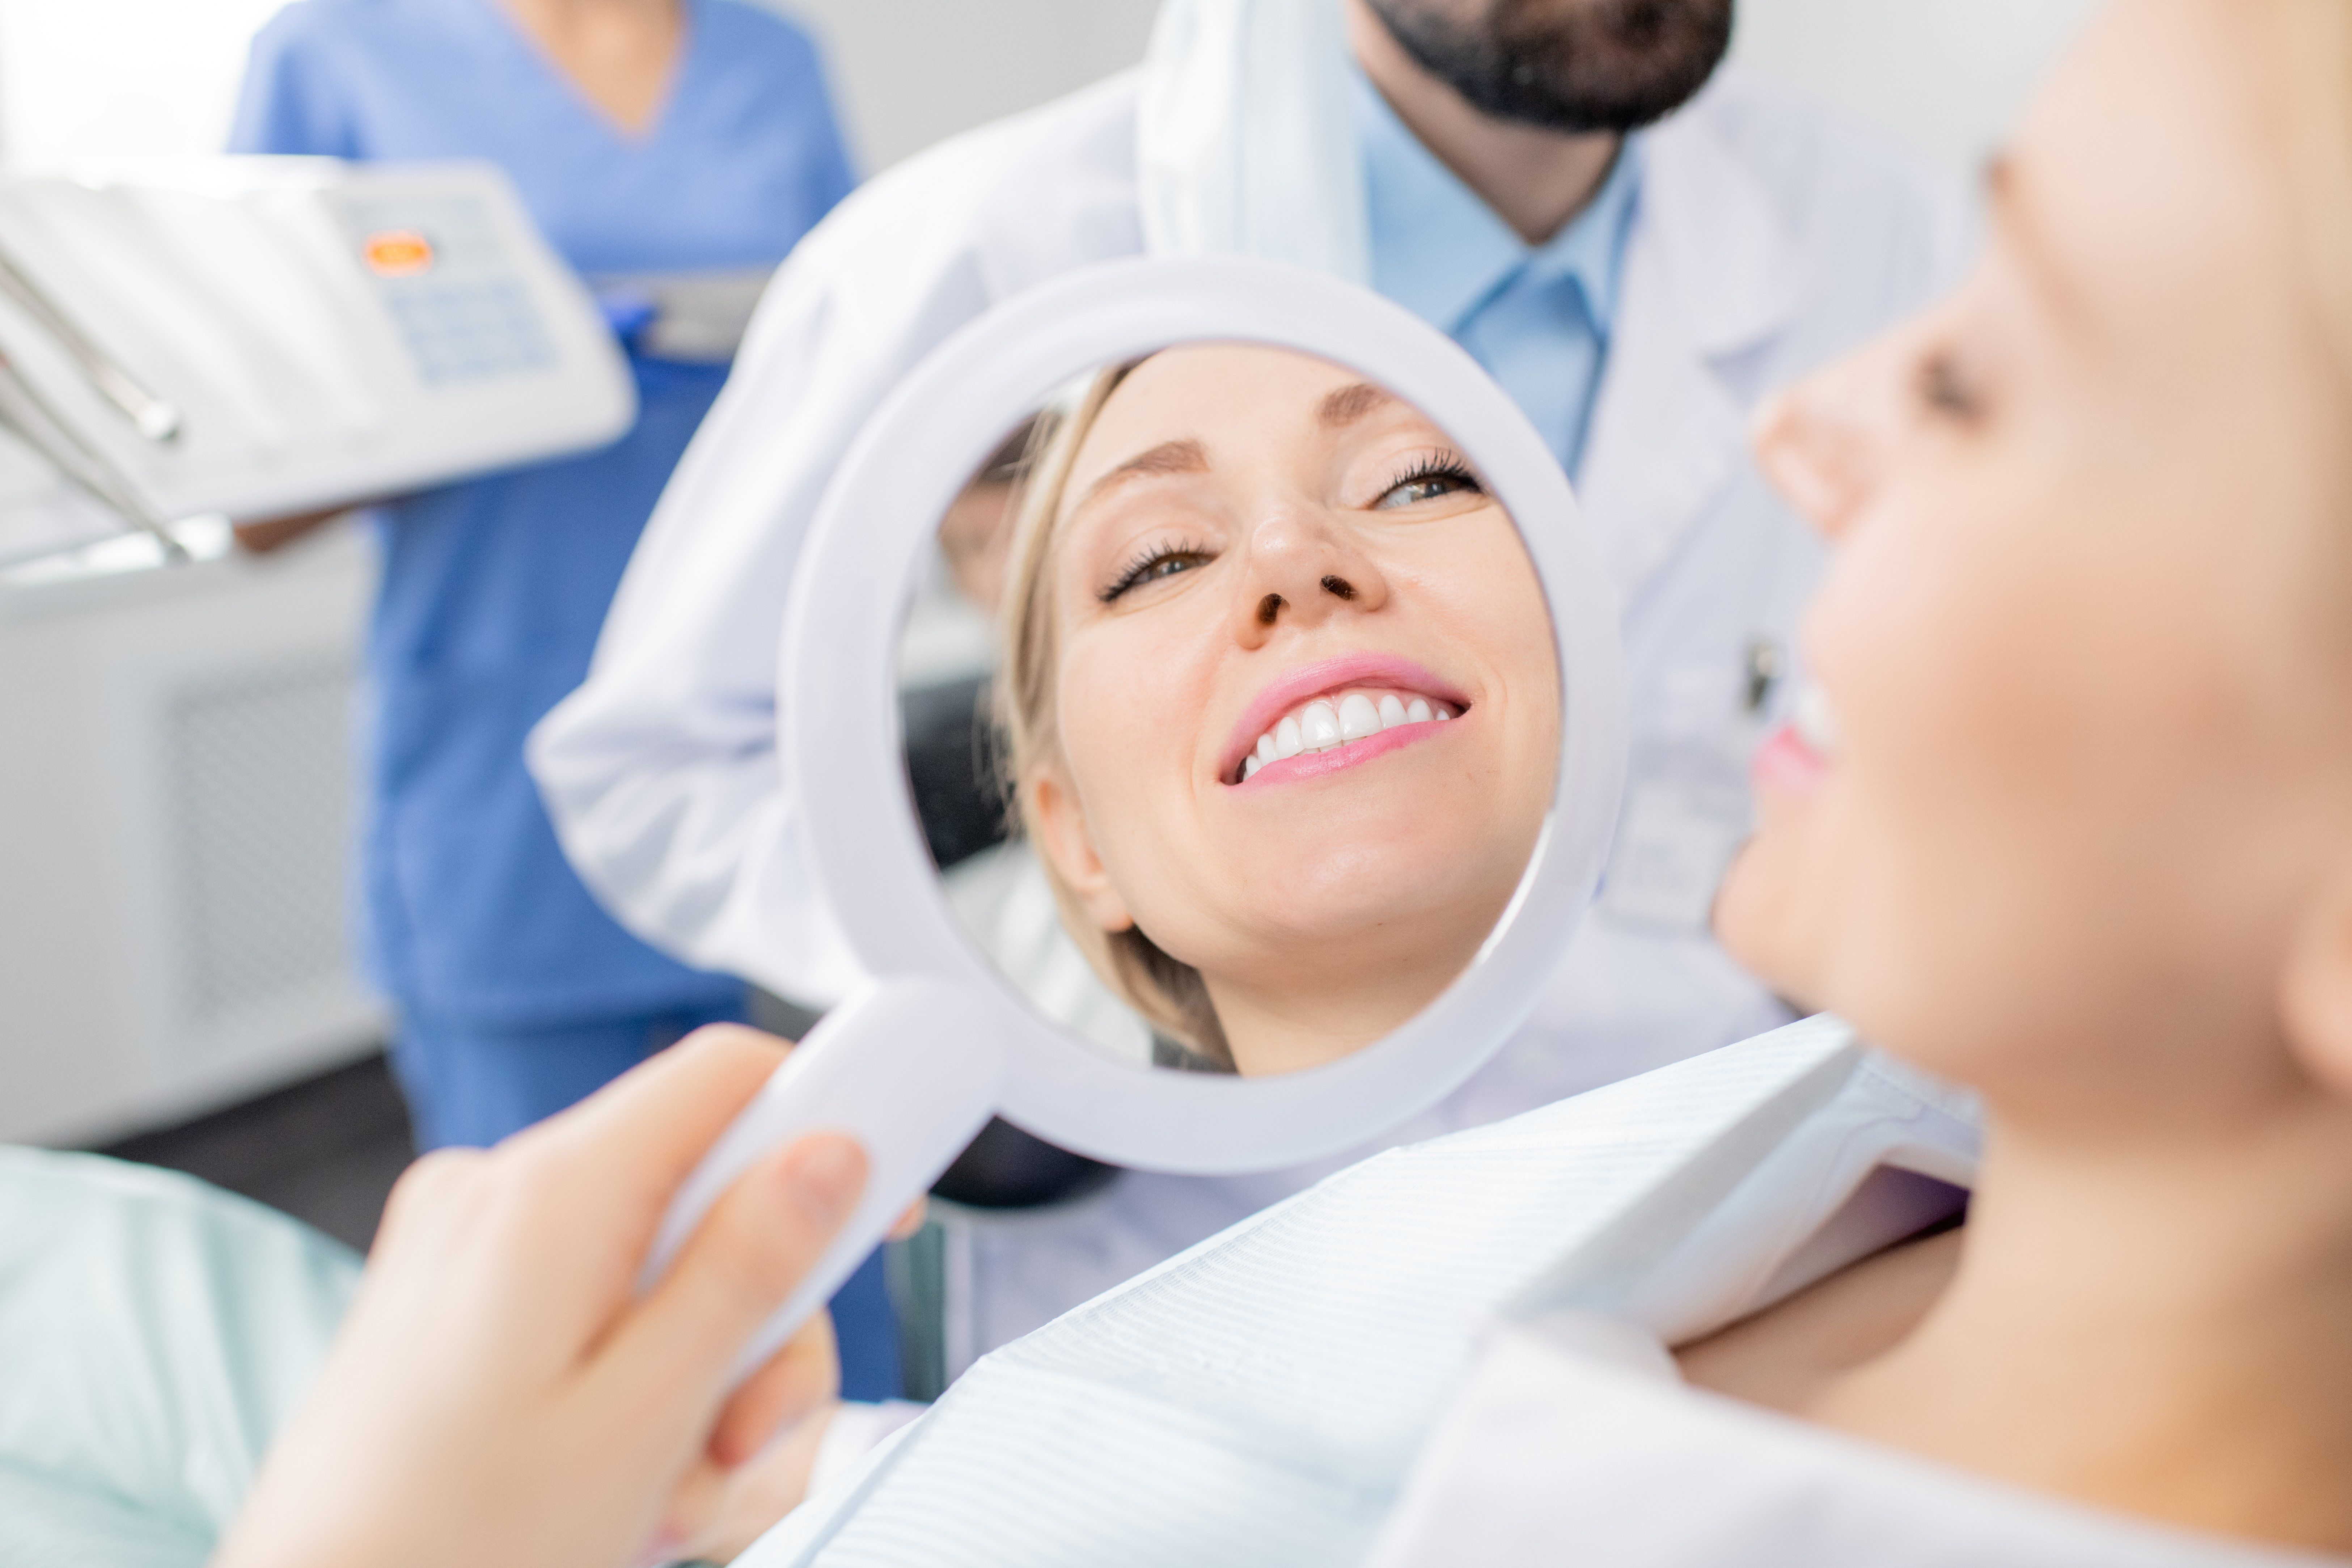 Why Choose Hybridge for Your Dental Implants